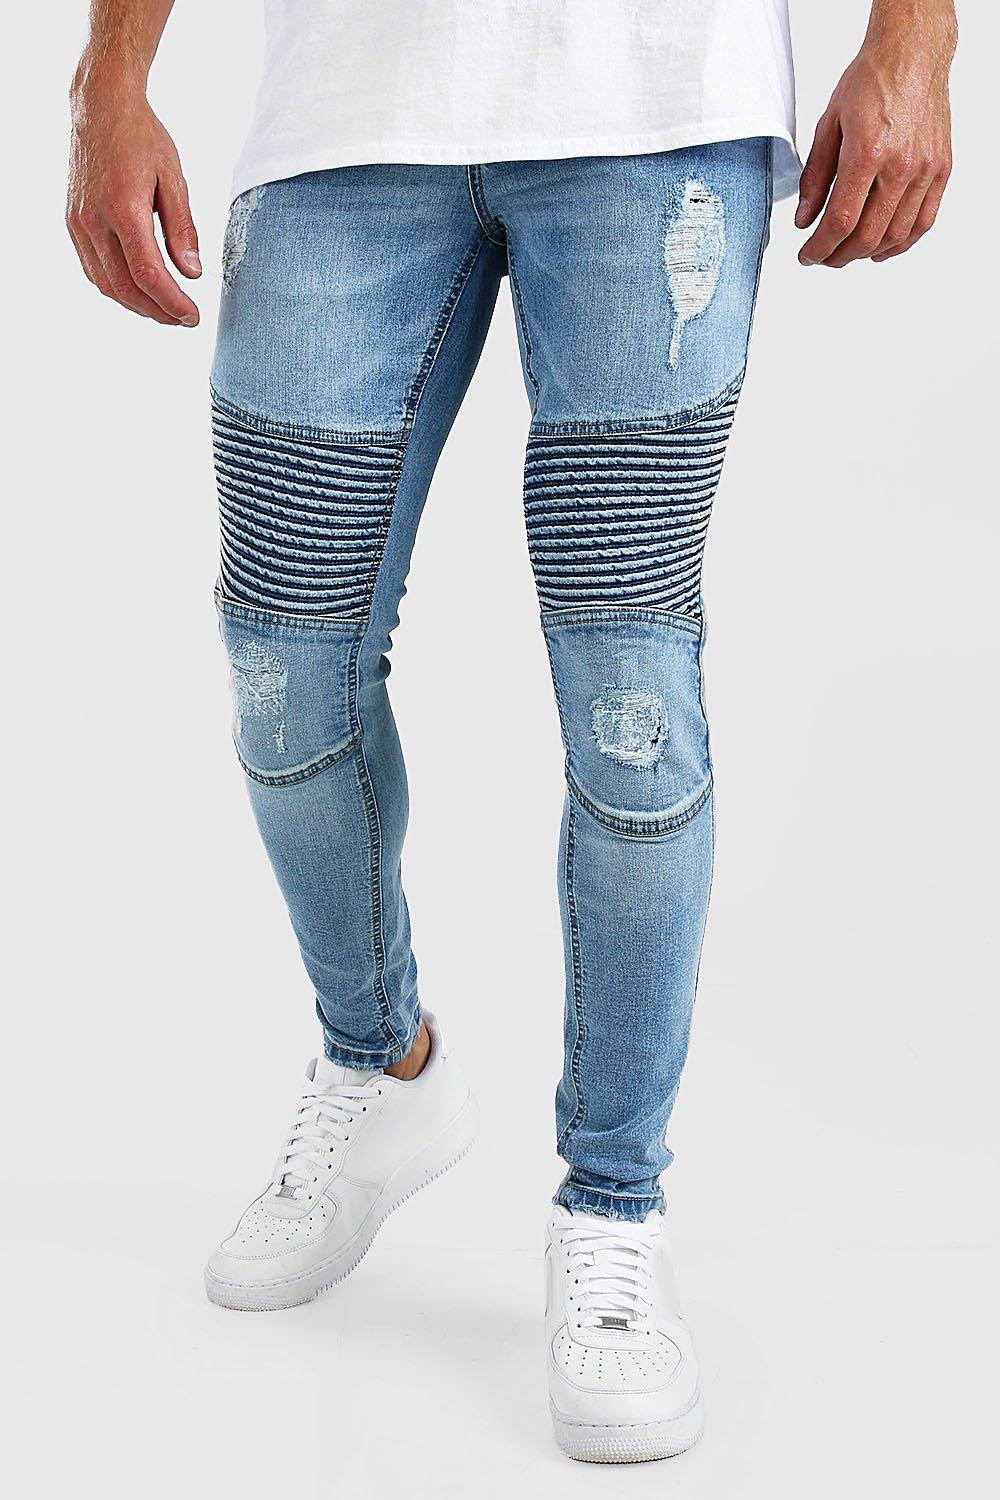 boohoo mens jeans sale